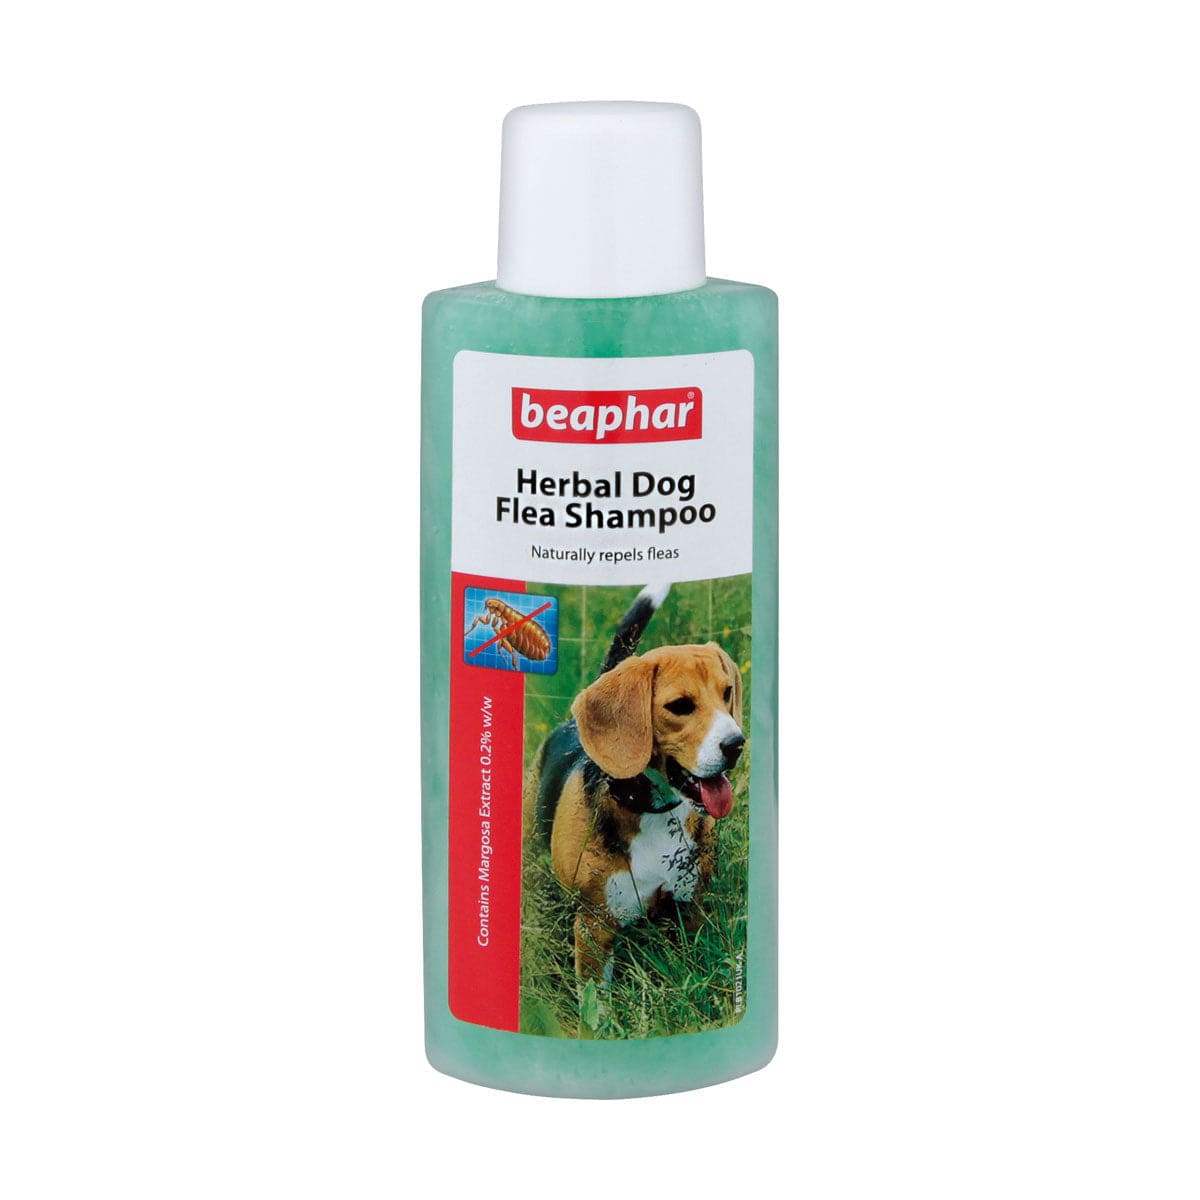 Beaphar dog flea shampoo